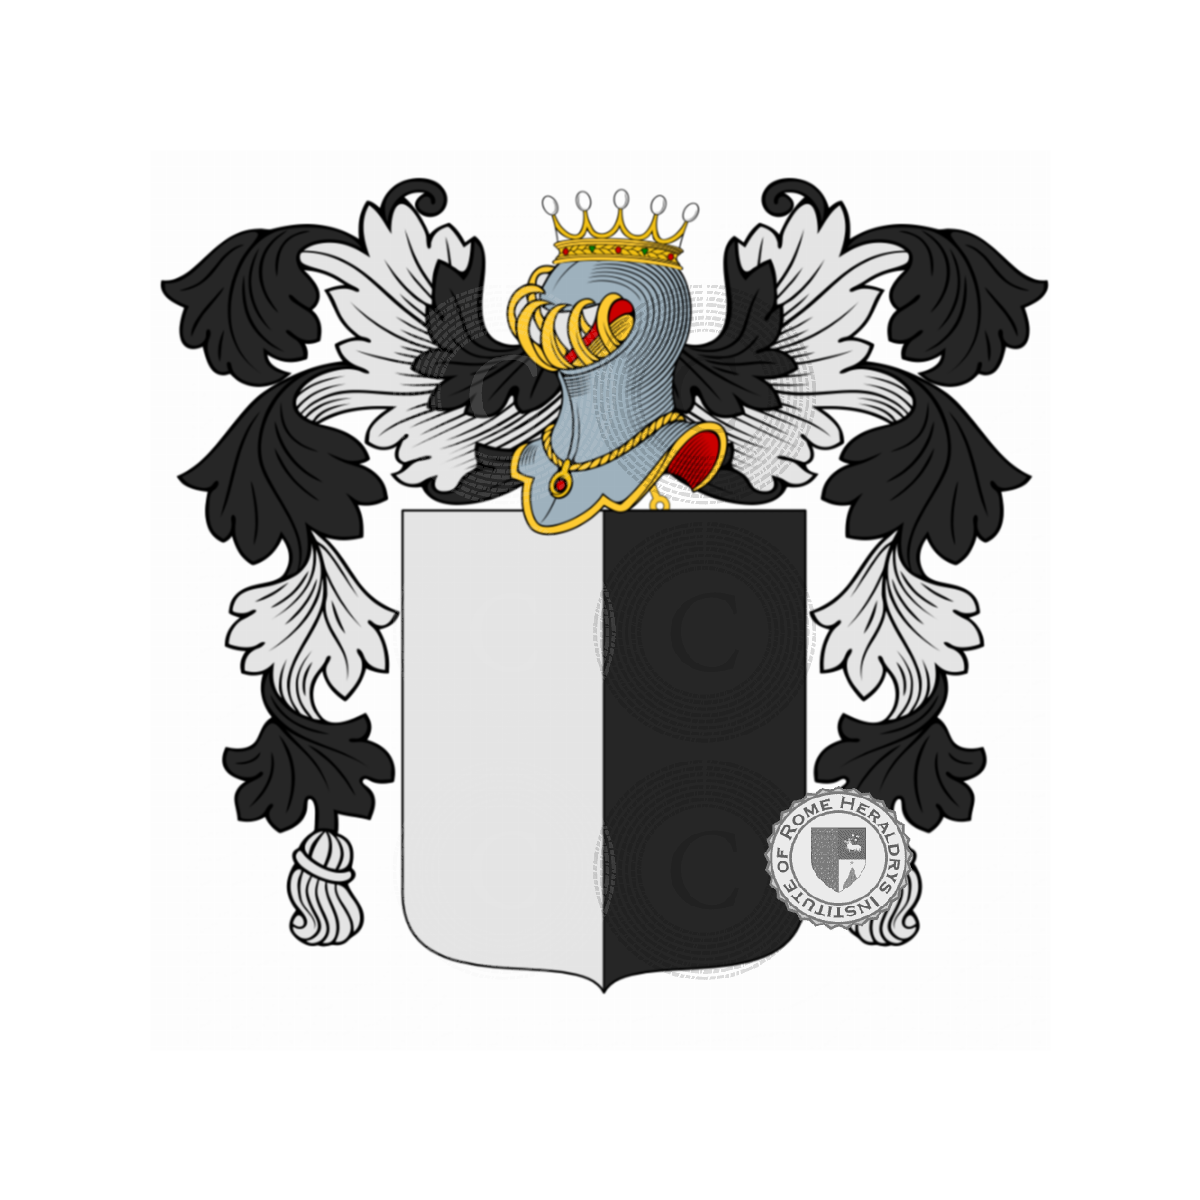 Wappen der FamilieCastello, Castello Aghinolfi,de Castello